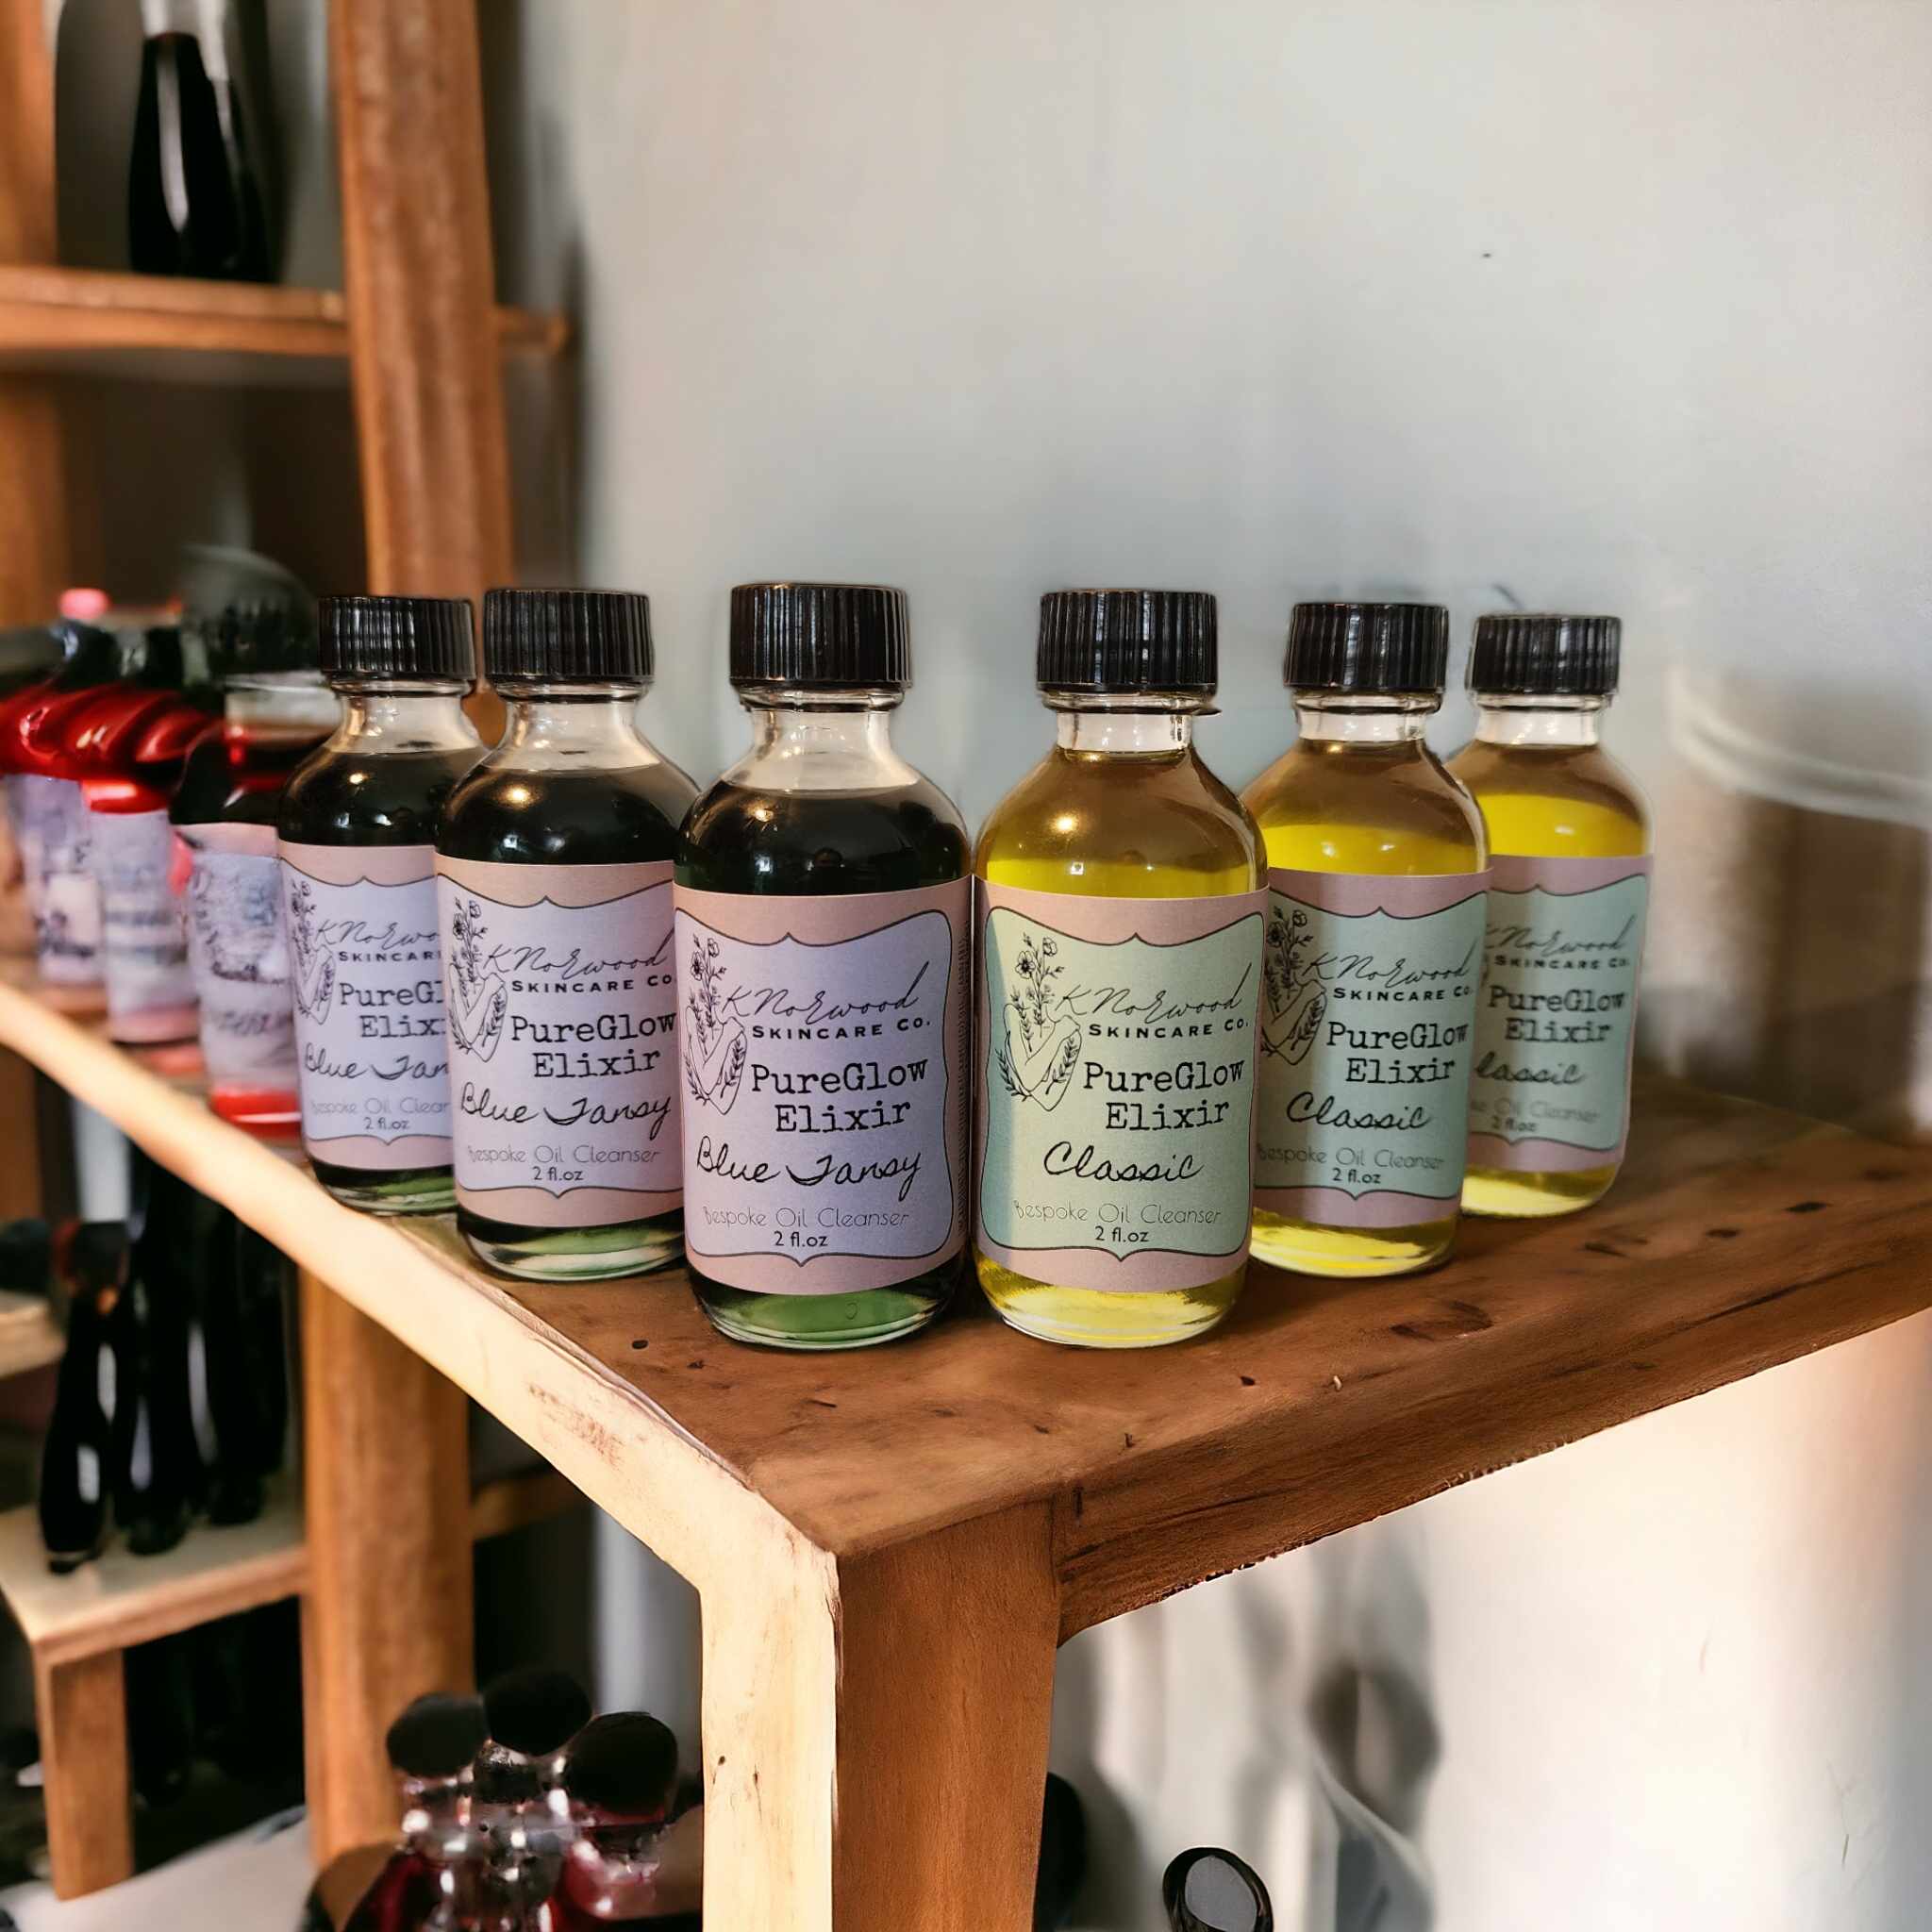 PureGlow Elixir Bottles sitting on a wooden shelf